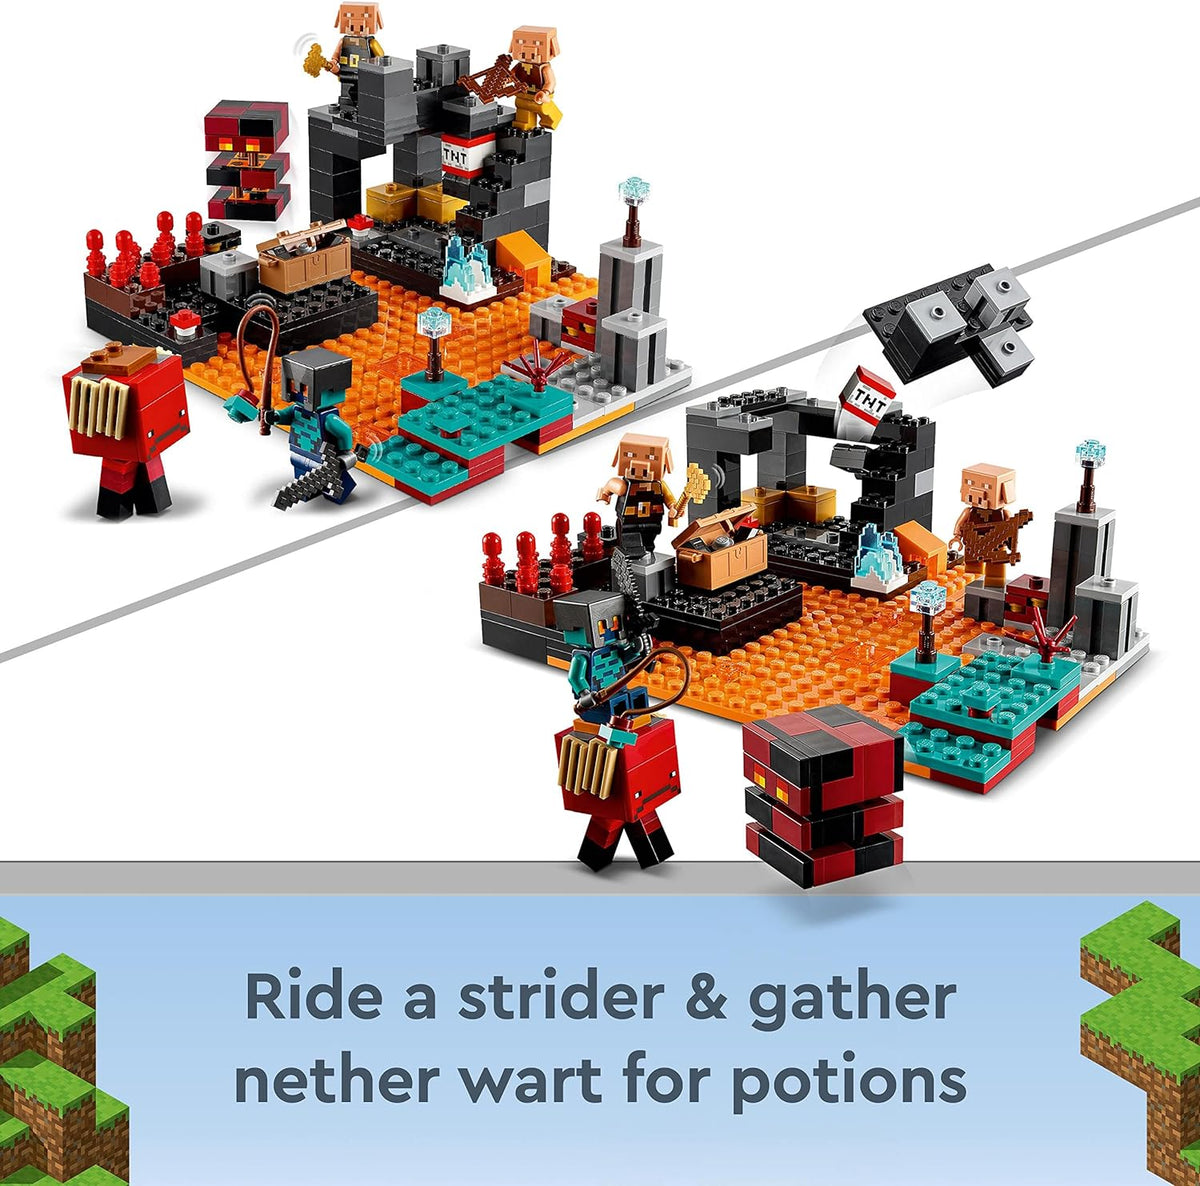 LEGO Minecraft 21185 The Nether Bastion Battle Action Toy